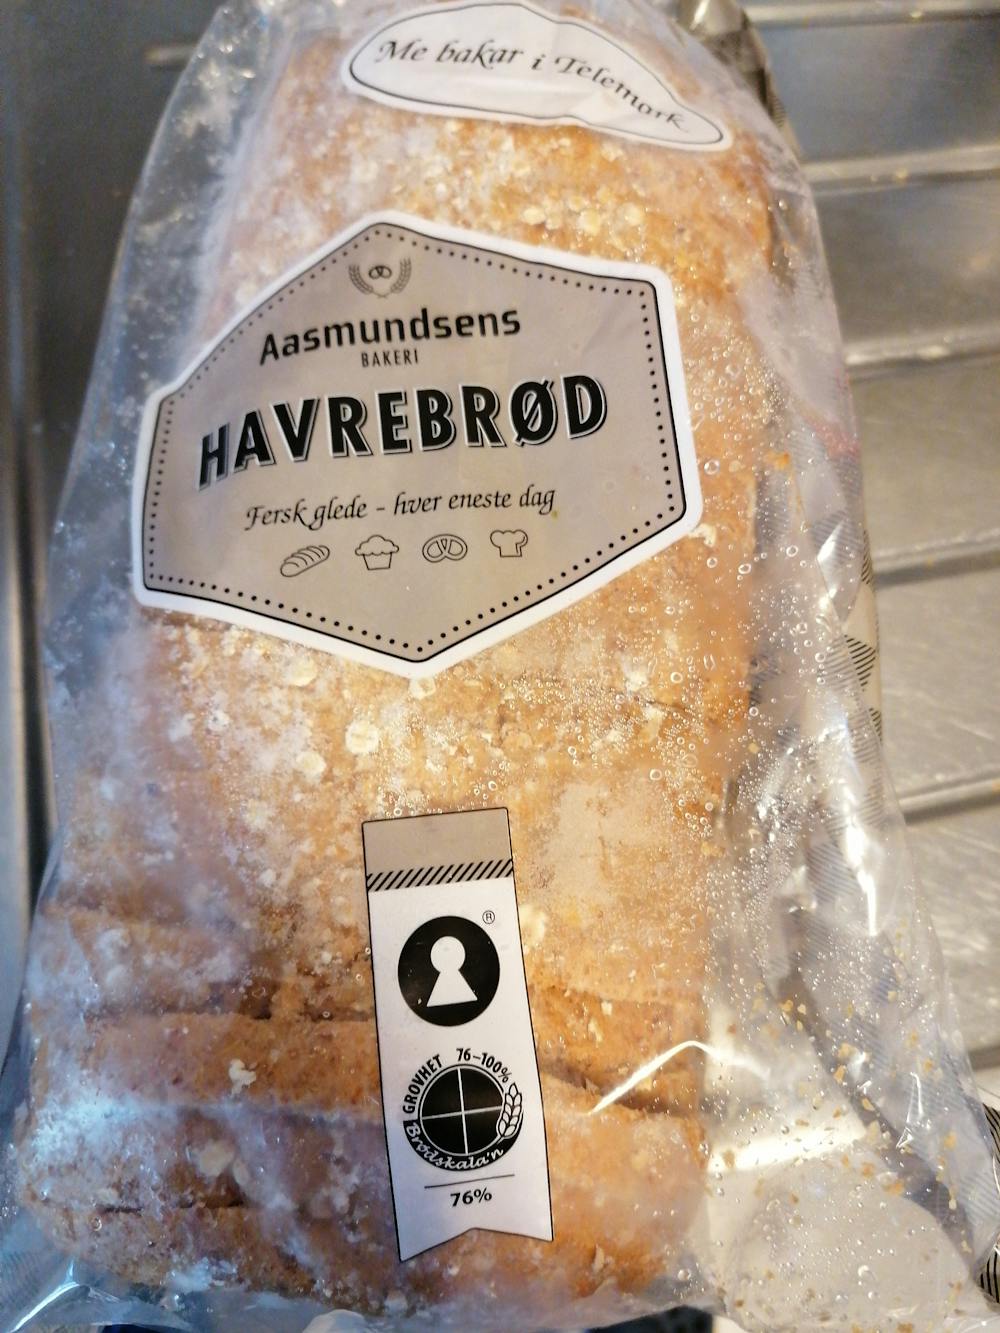 Havrebrød, Aasmundsens bakeri